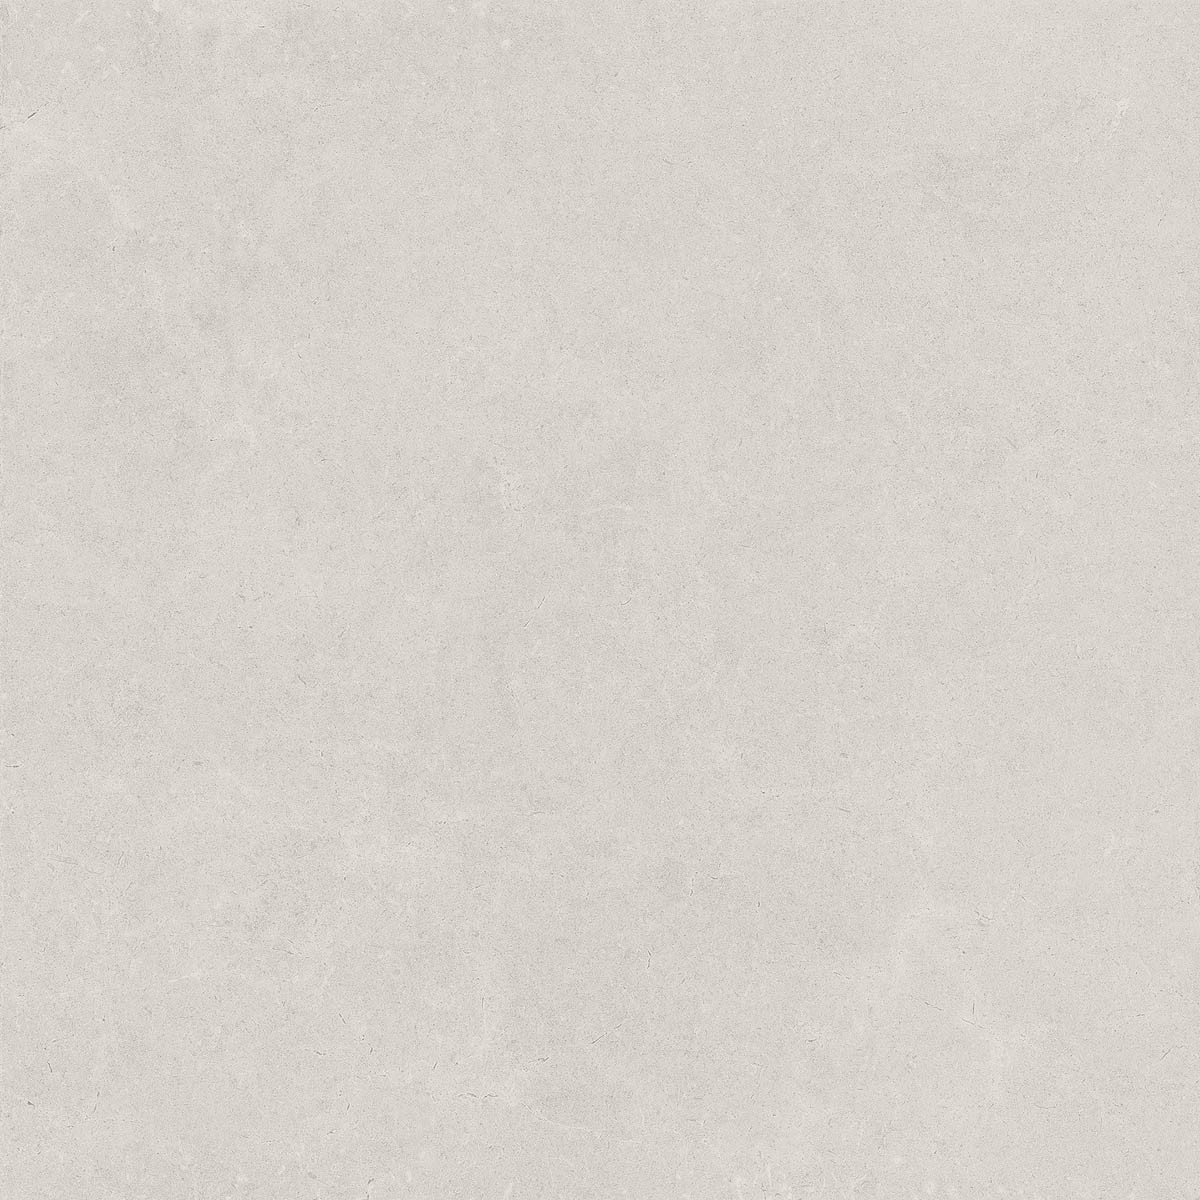 Craven Dunnill CDM0VS Paradise White Natural Wall & Floor Tile 450x450mm